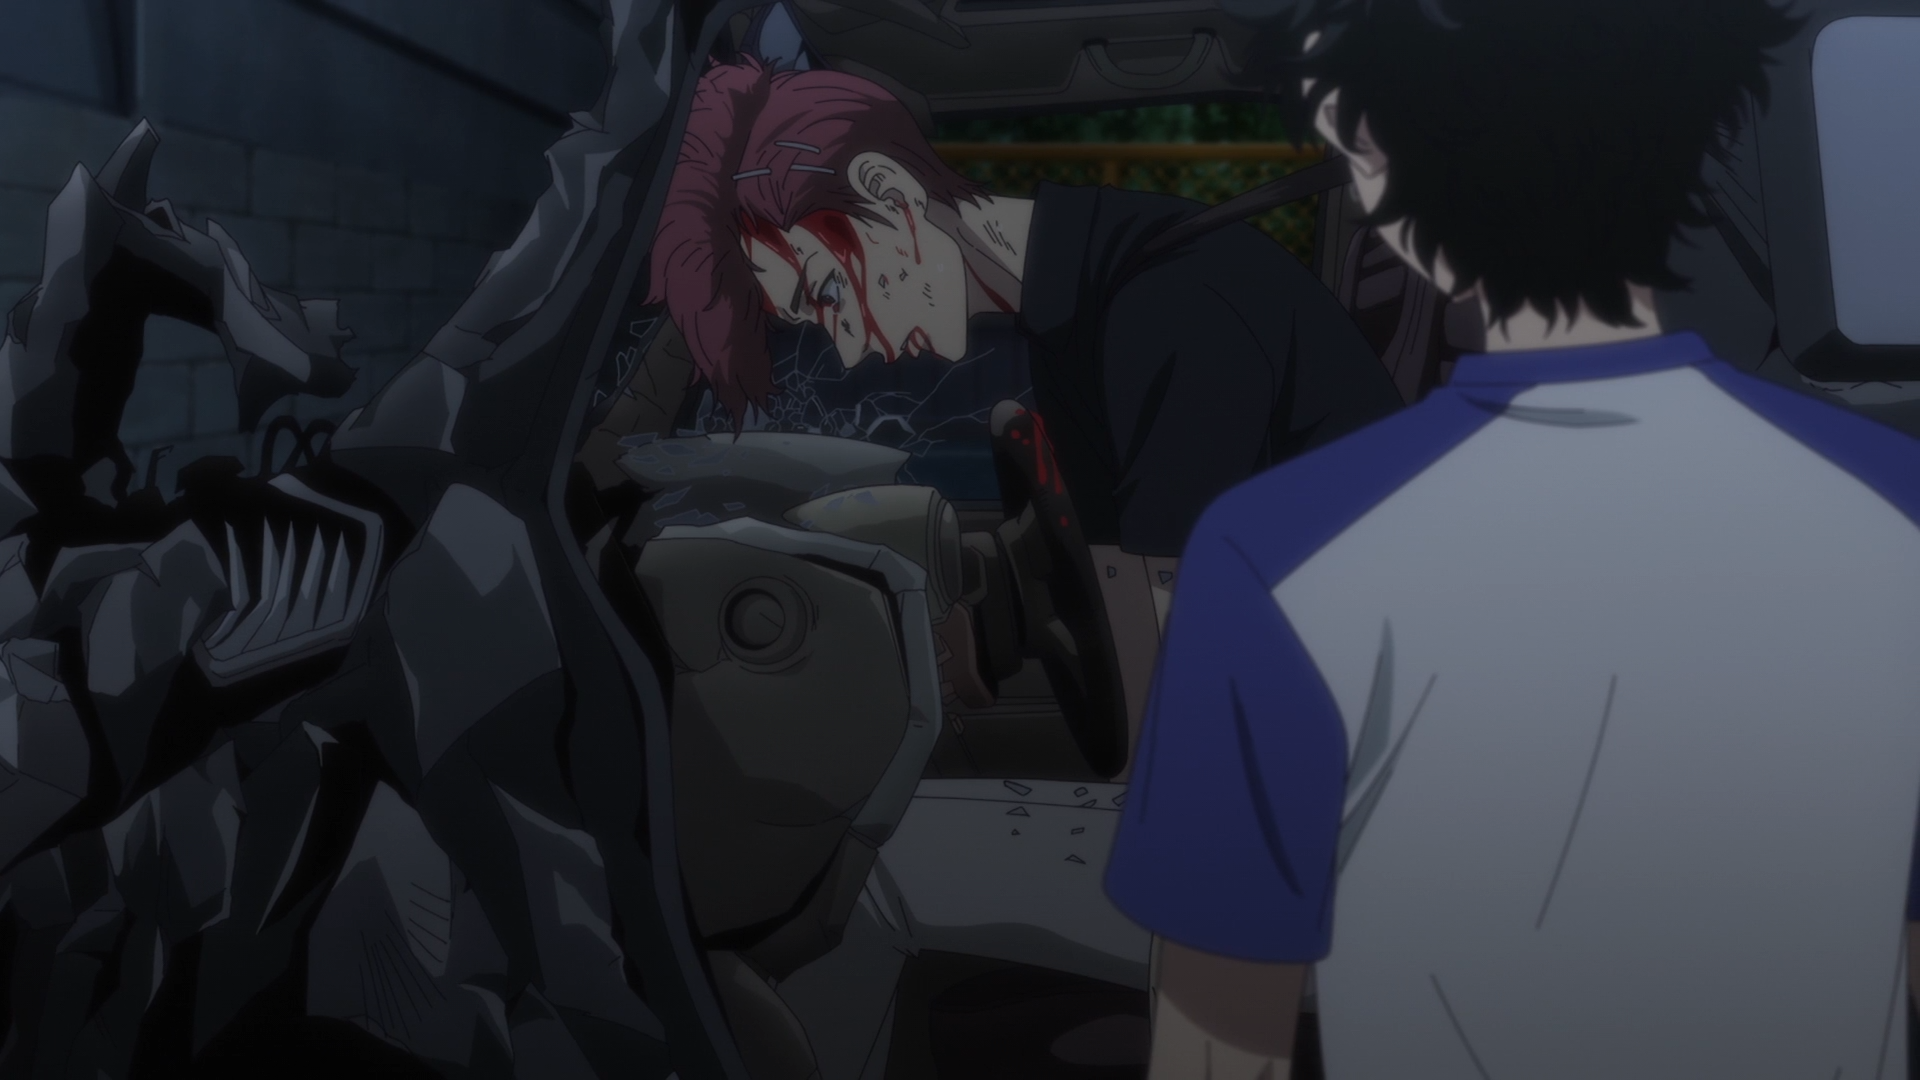 Akkun kills himself because he's scared 😫 #anime #tokyorevengers